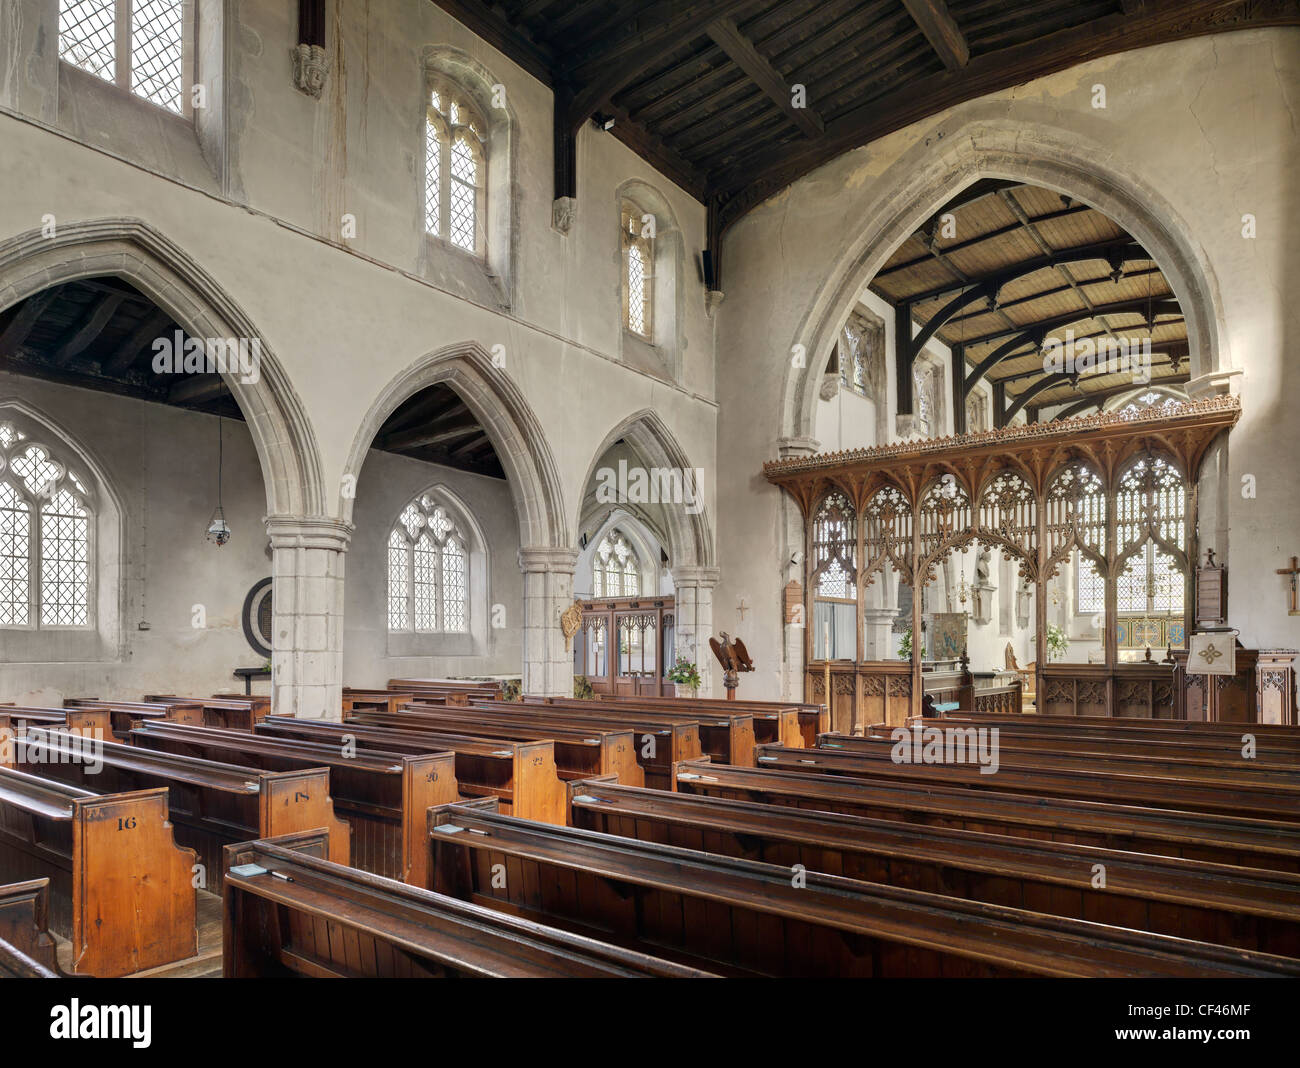 Das Innere der Finchingfield Kirche in Essex. Stockfoto